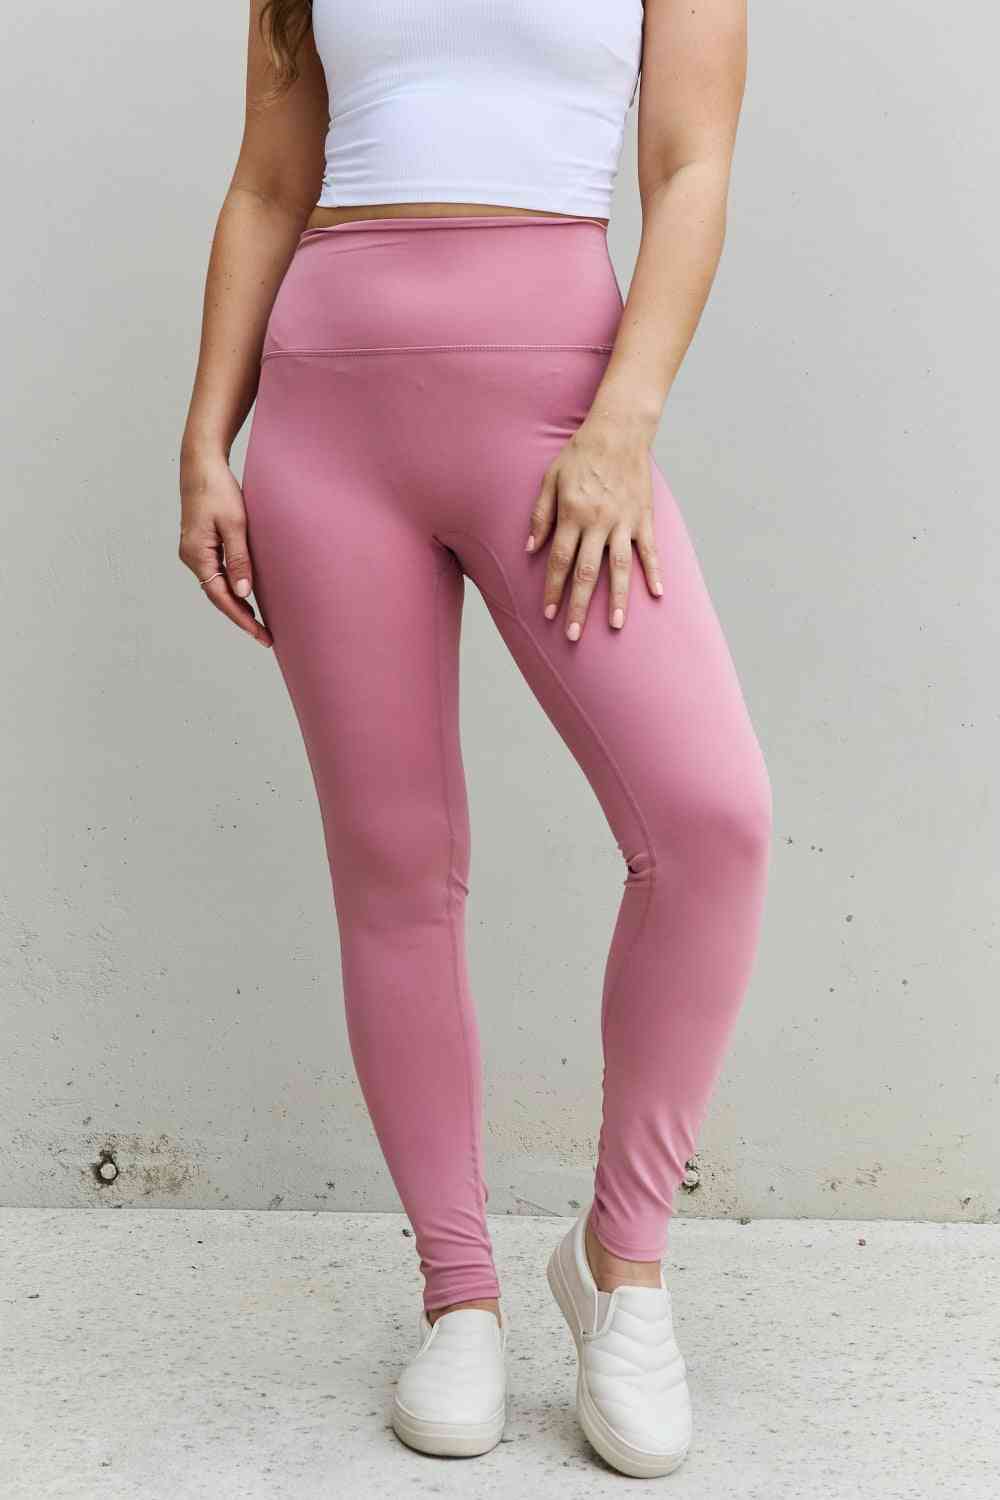 Zenana Fit For You Full Size High Waist Active Leggings in Light Rose - EMMY